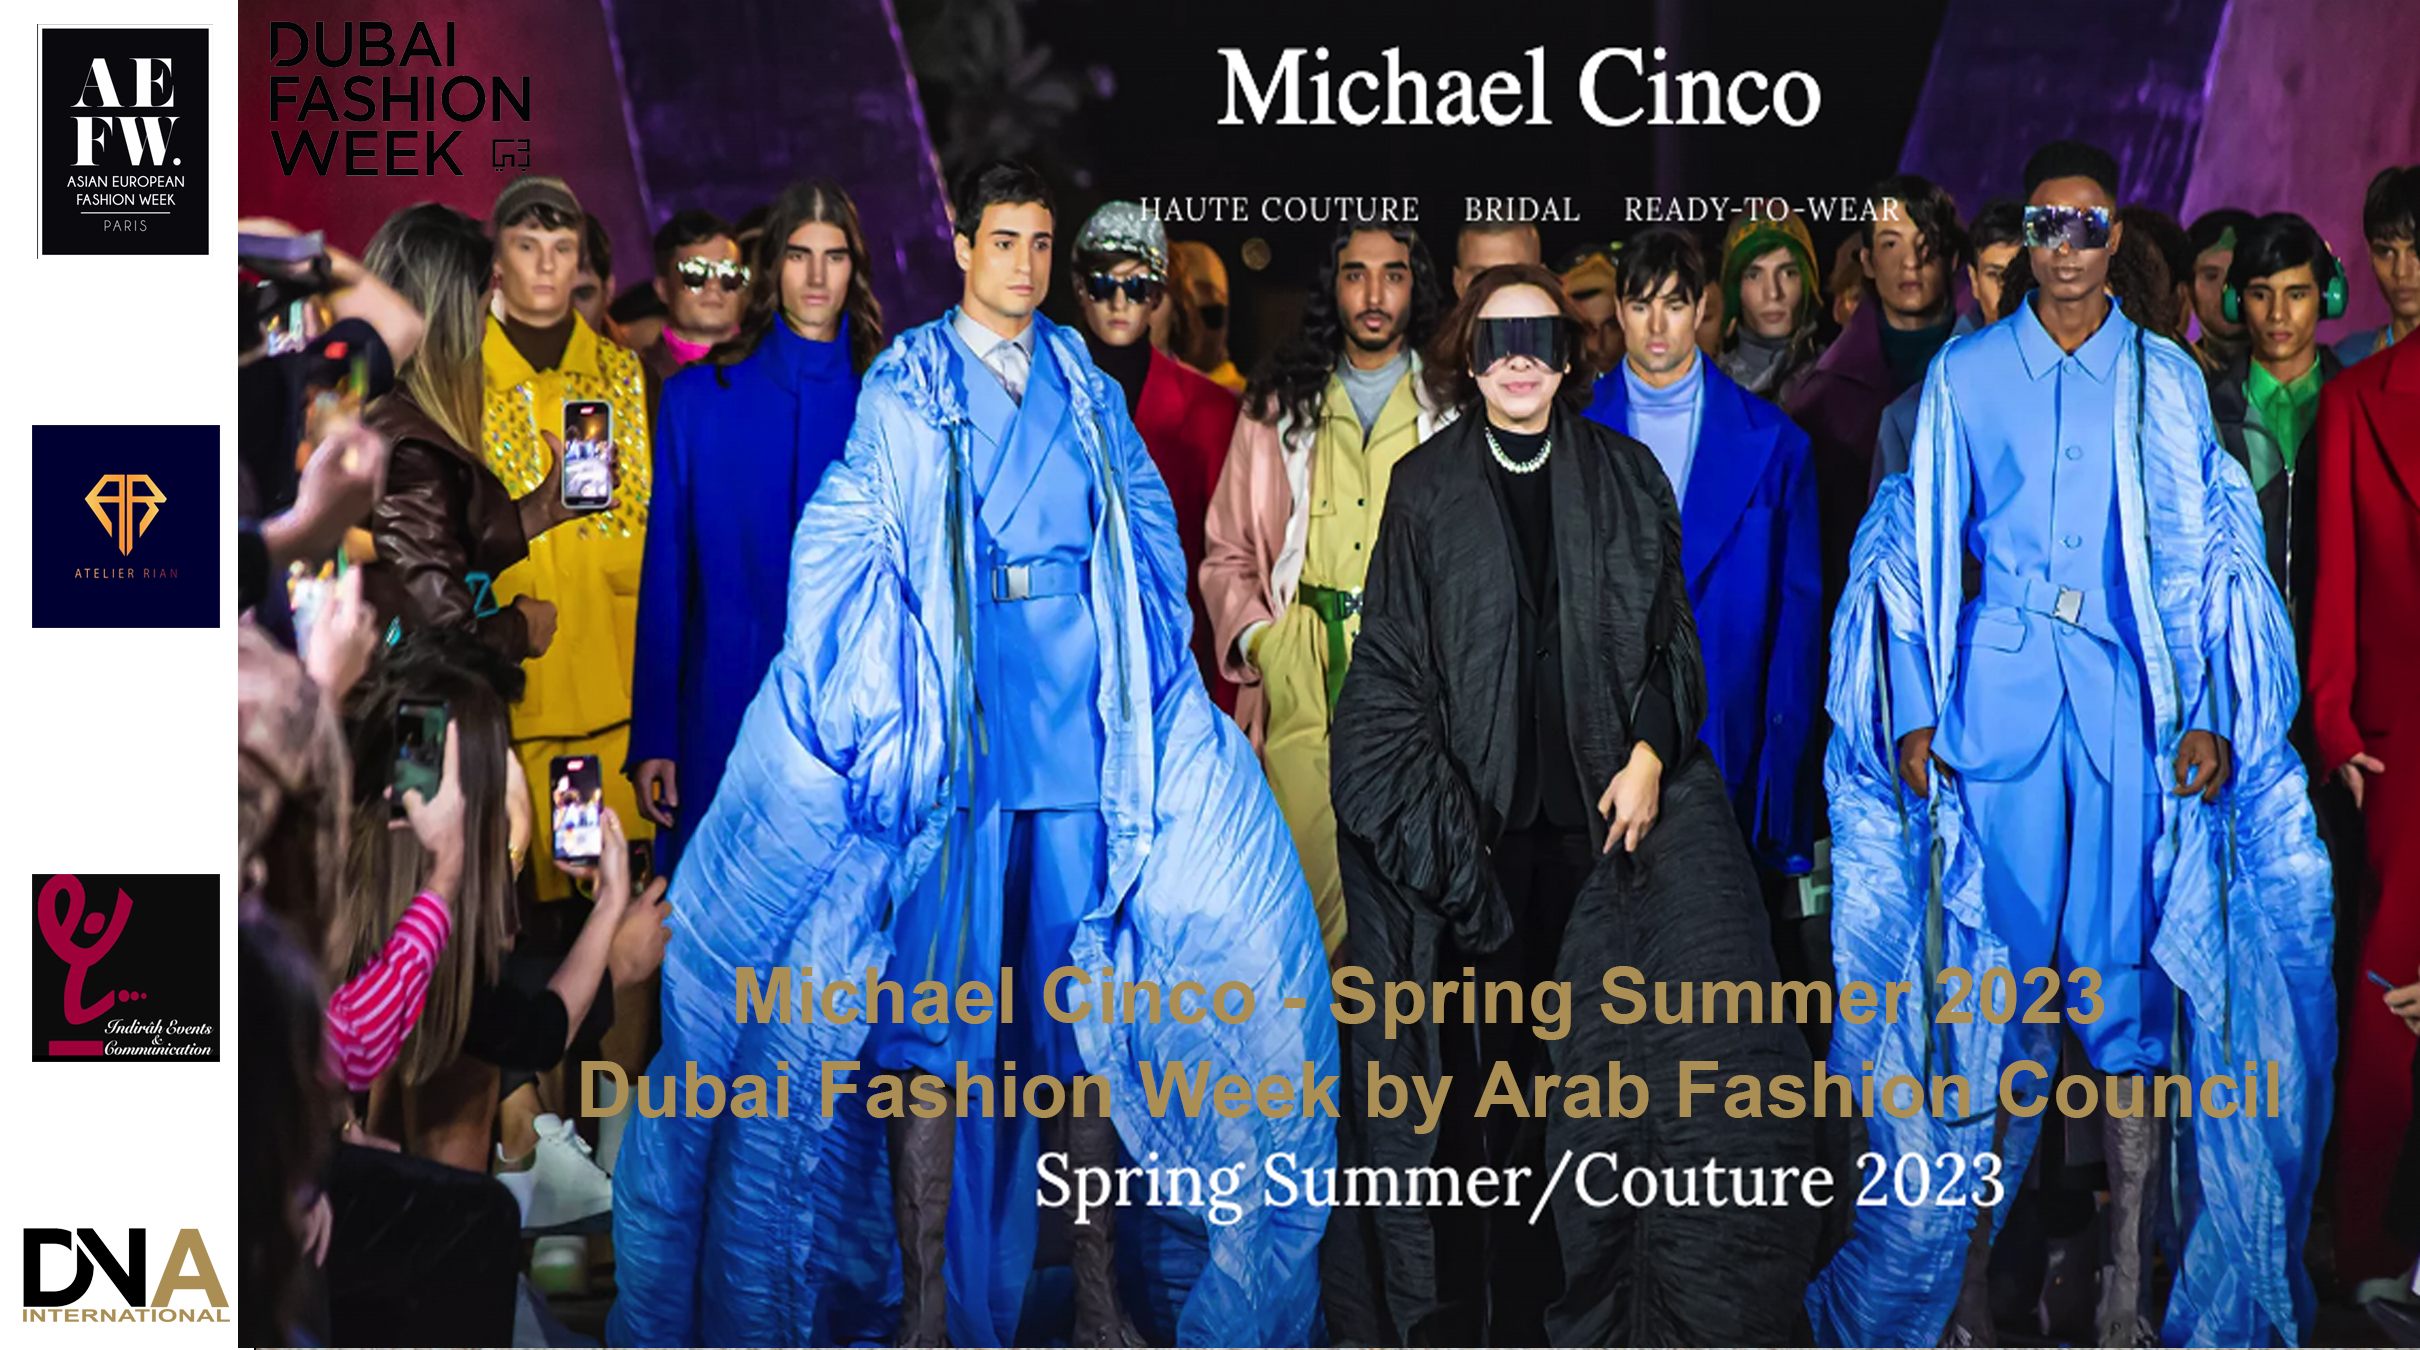 AFRICA-VOGUE-COVER-Michael-Cinco-Spring-Summer-2023-Dubai-Fashion-Week-by-Arab-Fashion-Council-DN-AFRICA-Media-Partner